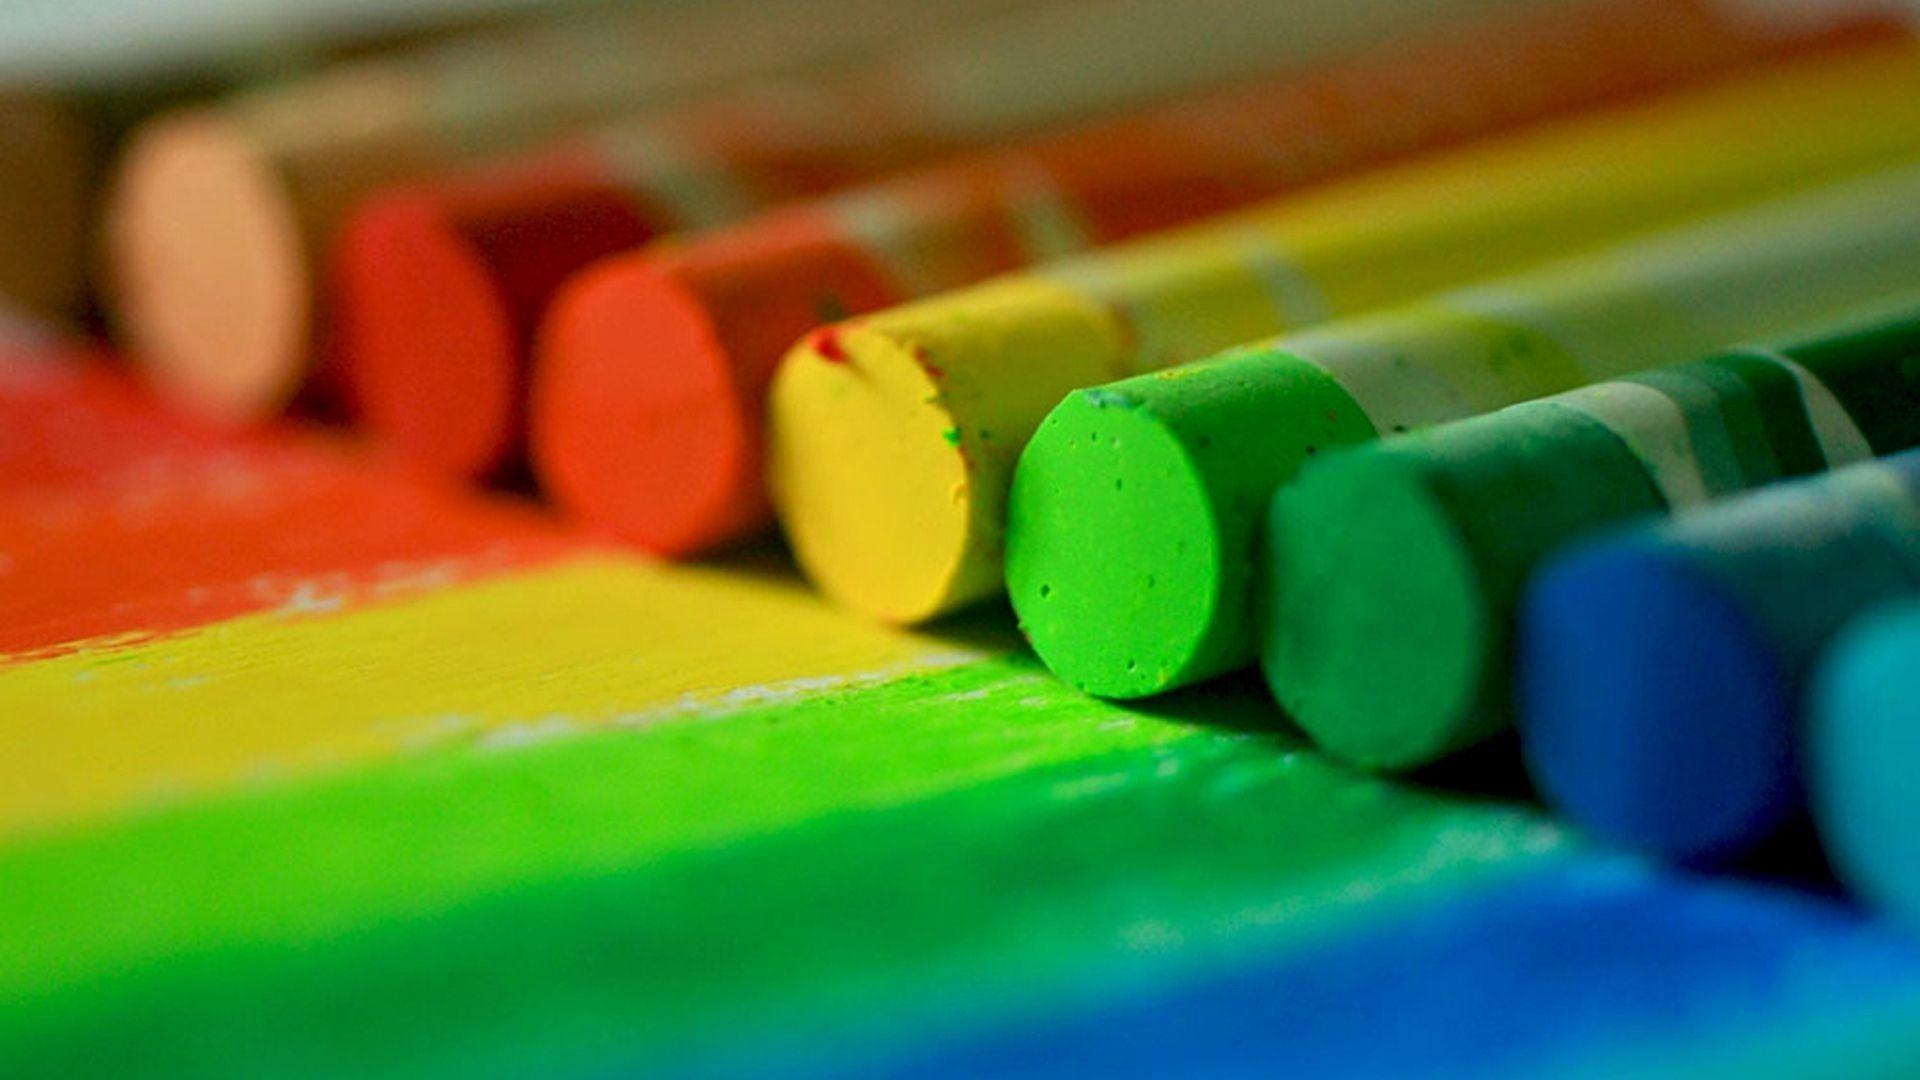 chalk, crayons, multicolored /chalk